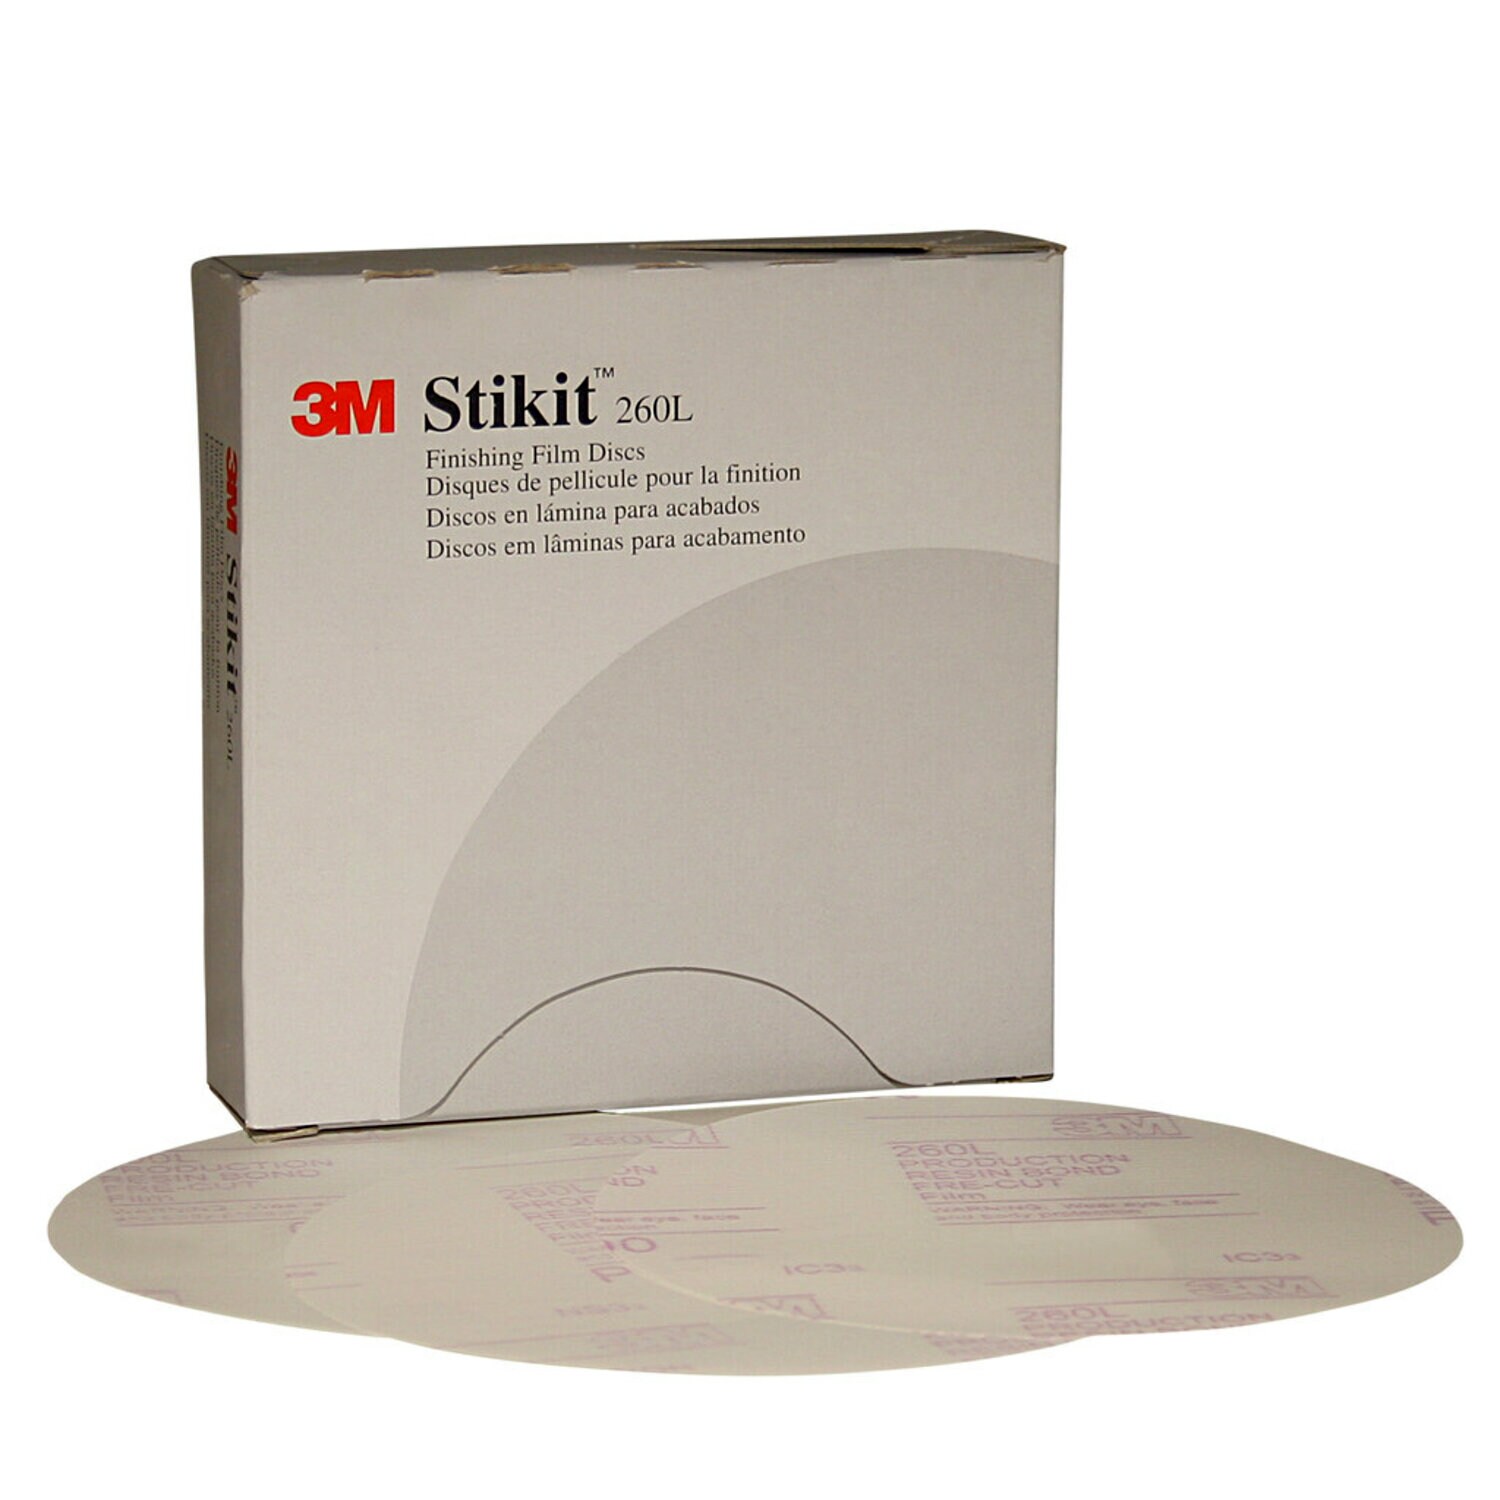 7000044717 - 3M Stikit Finishing Film Abrasive Disc 260L, 01319, 6 in, P1000, 100
discs per carton, 4 cartons per case